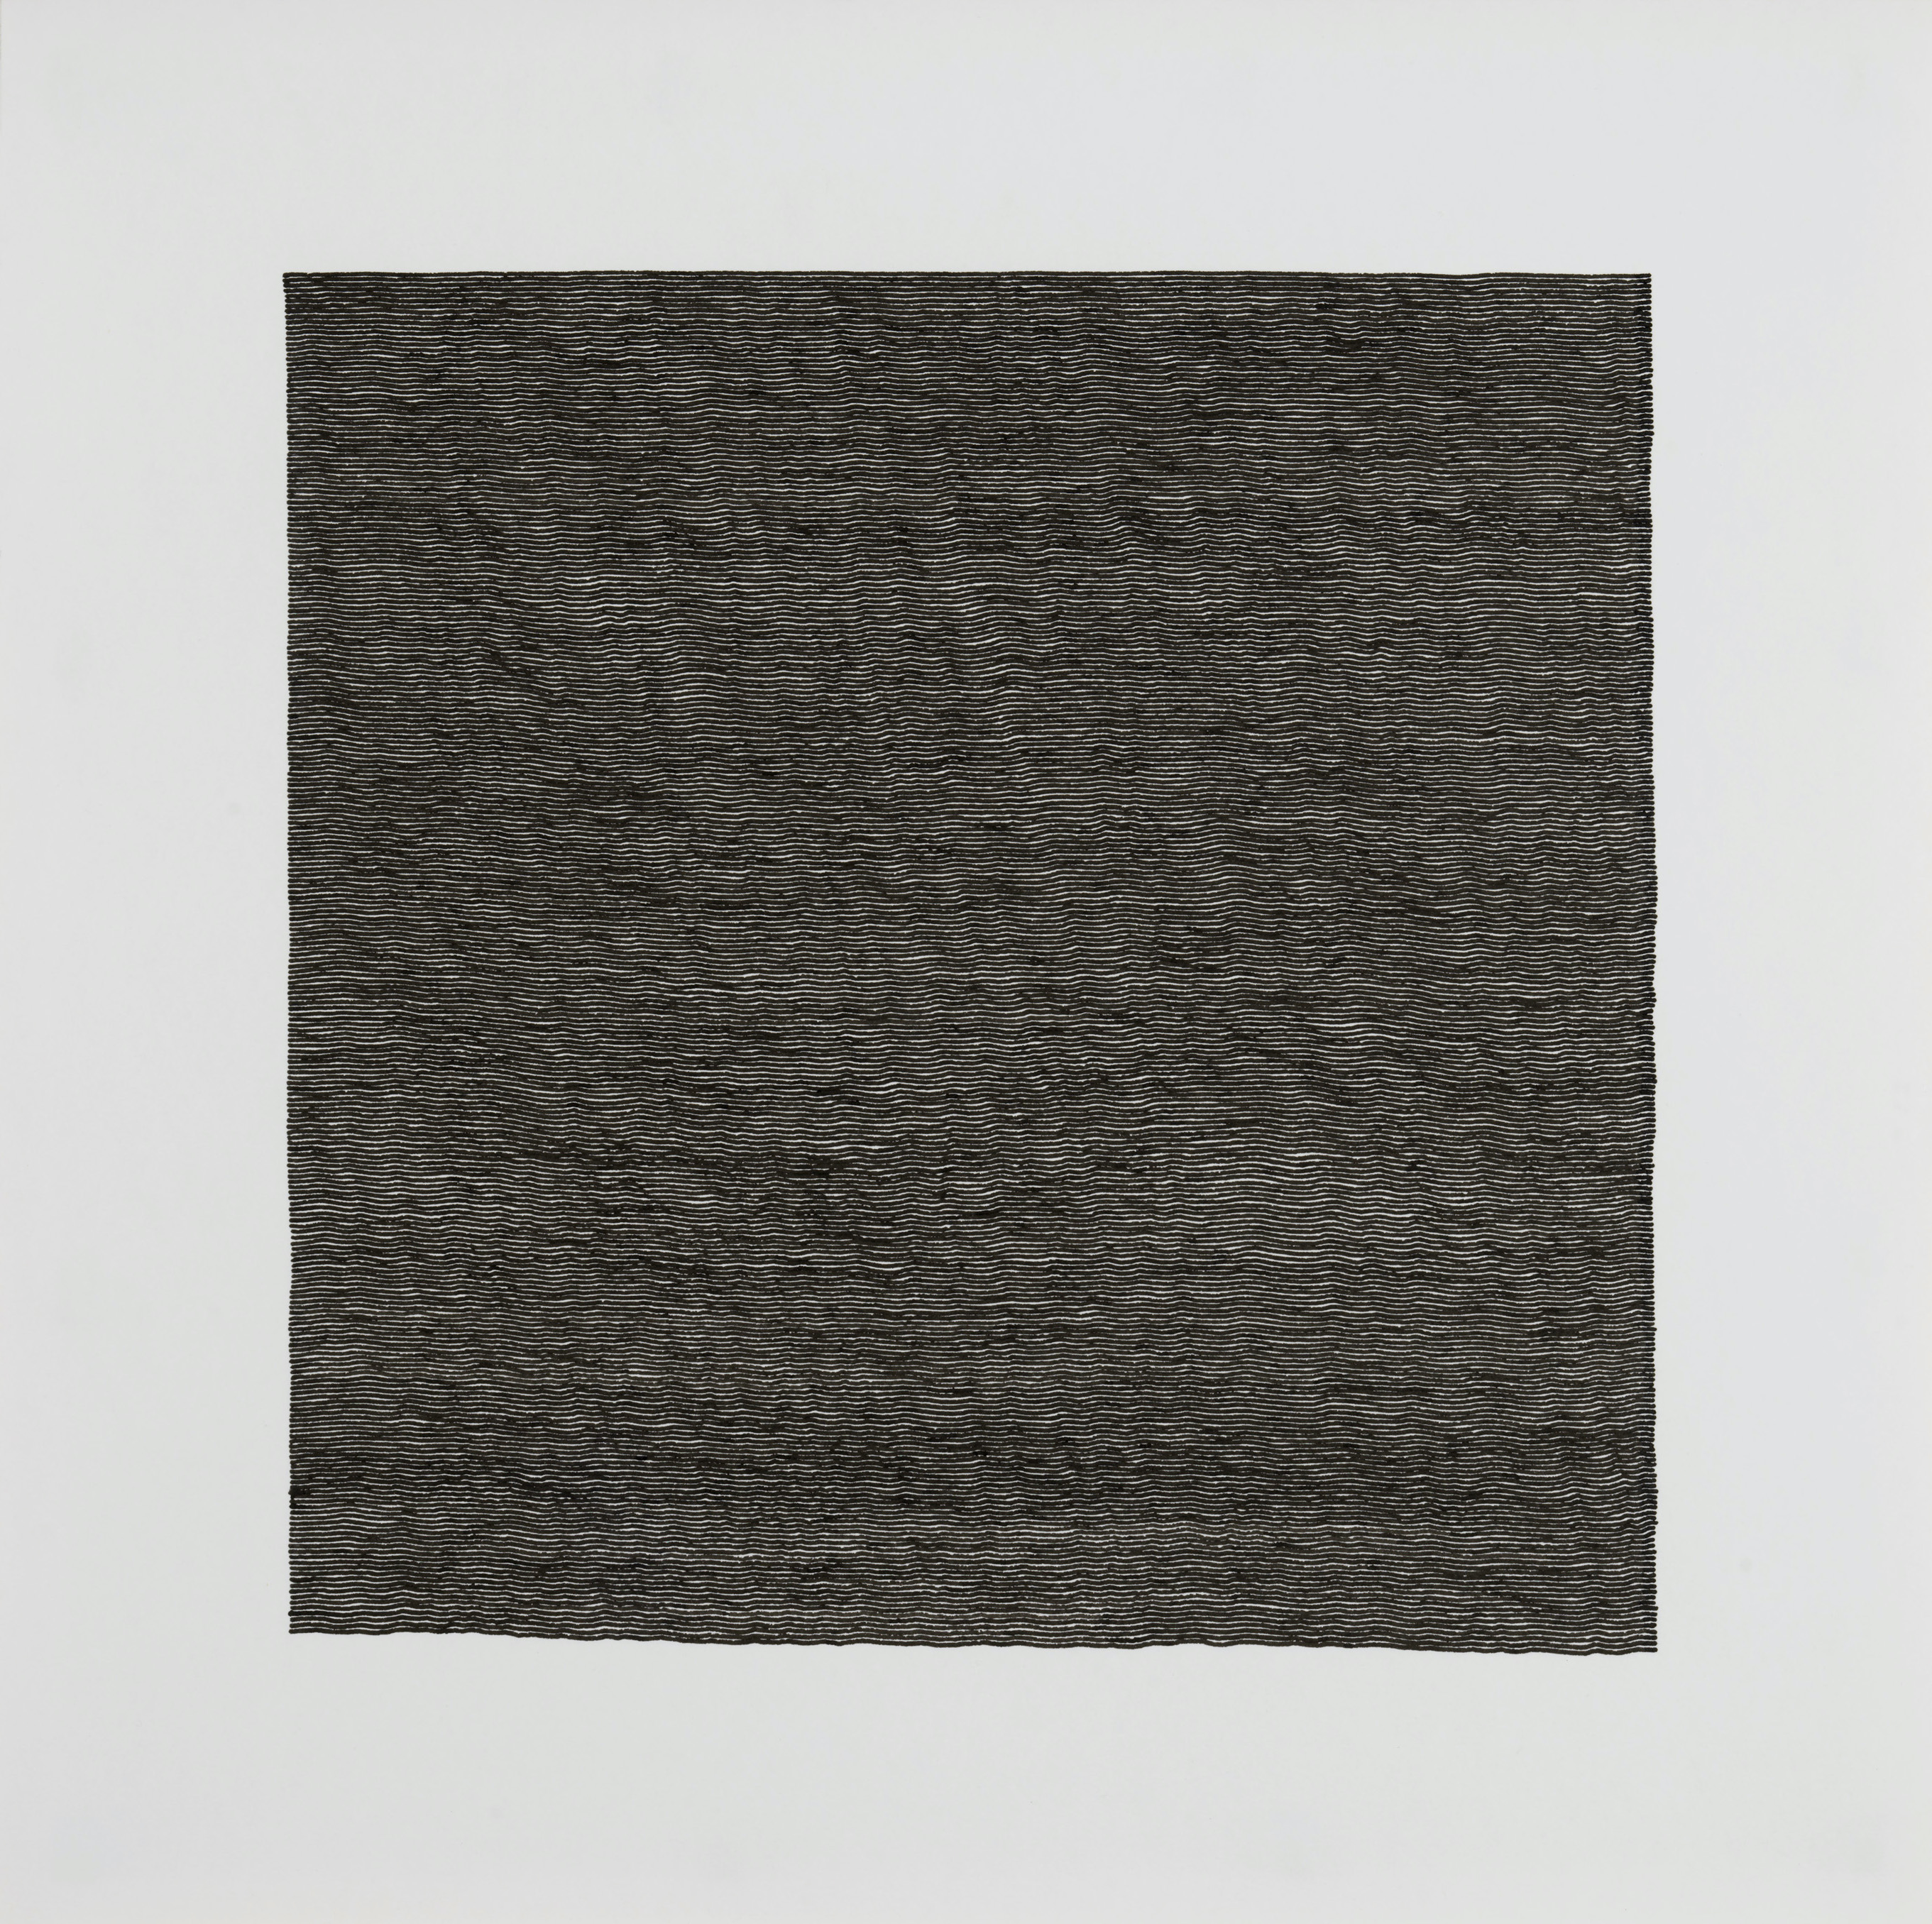 David Connearn, Five Drawings (1.0mm line), black ink on 300gsm Heritage Rag paper, 42x42cm, 2019